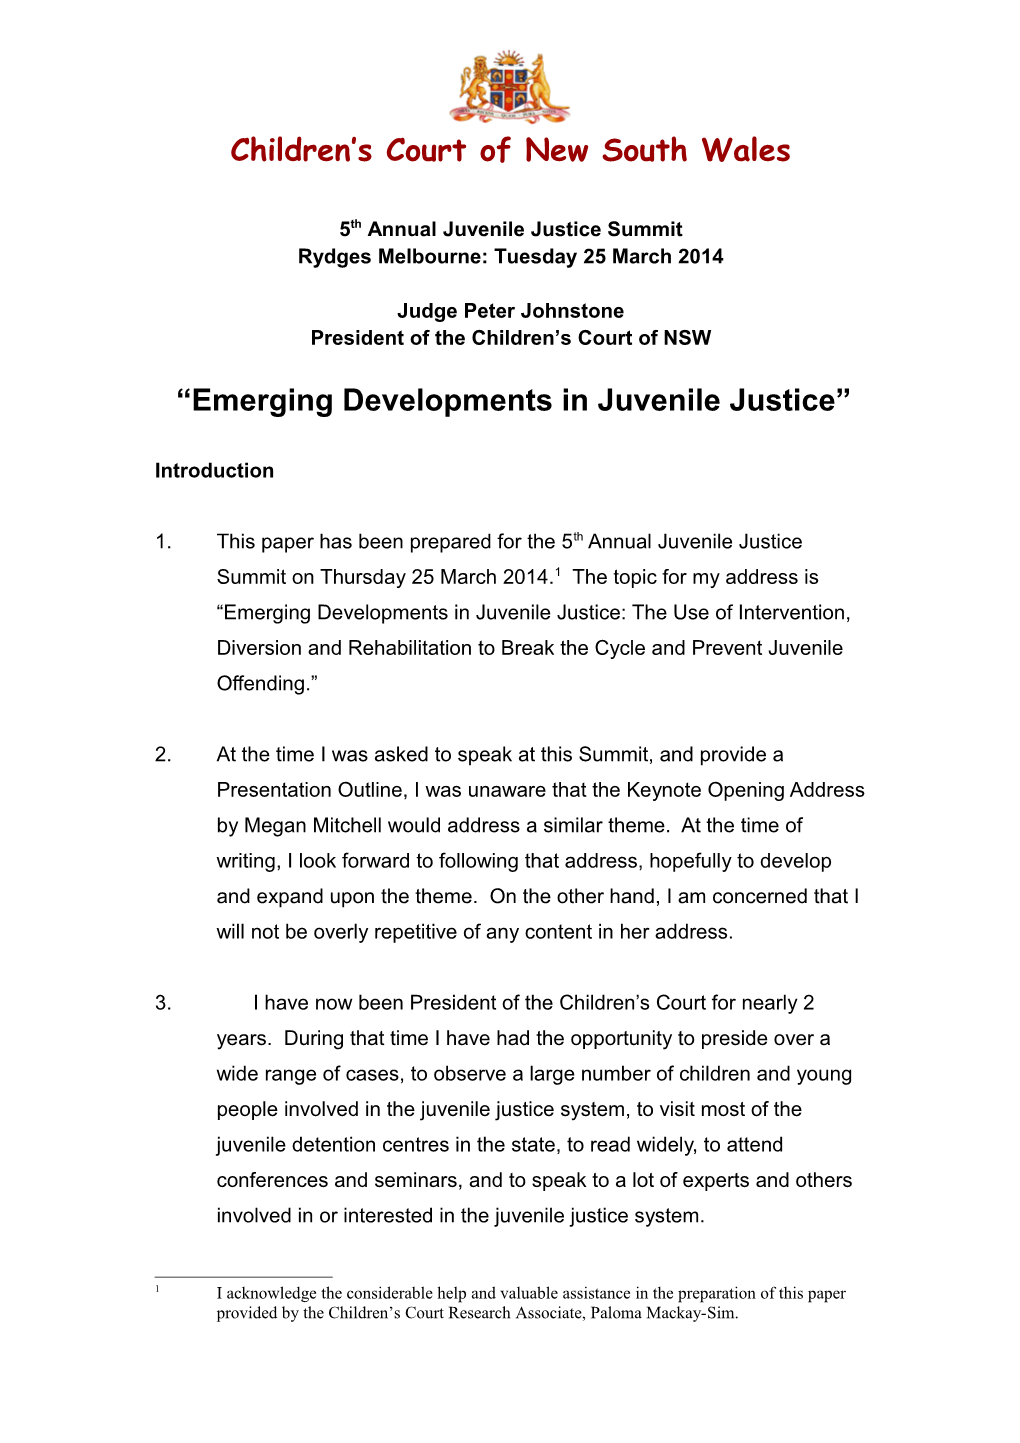 Emerging Developments in Juvenile Justice